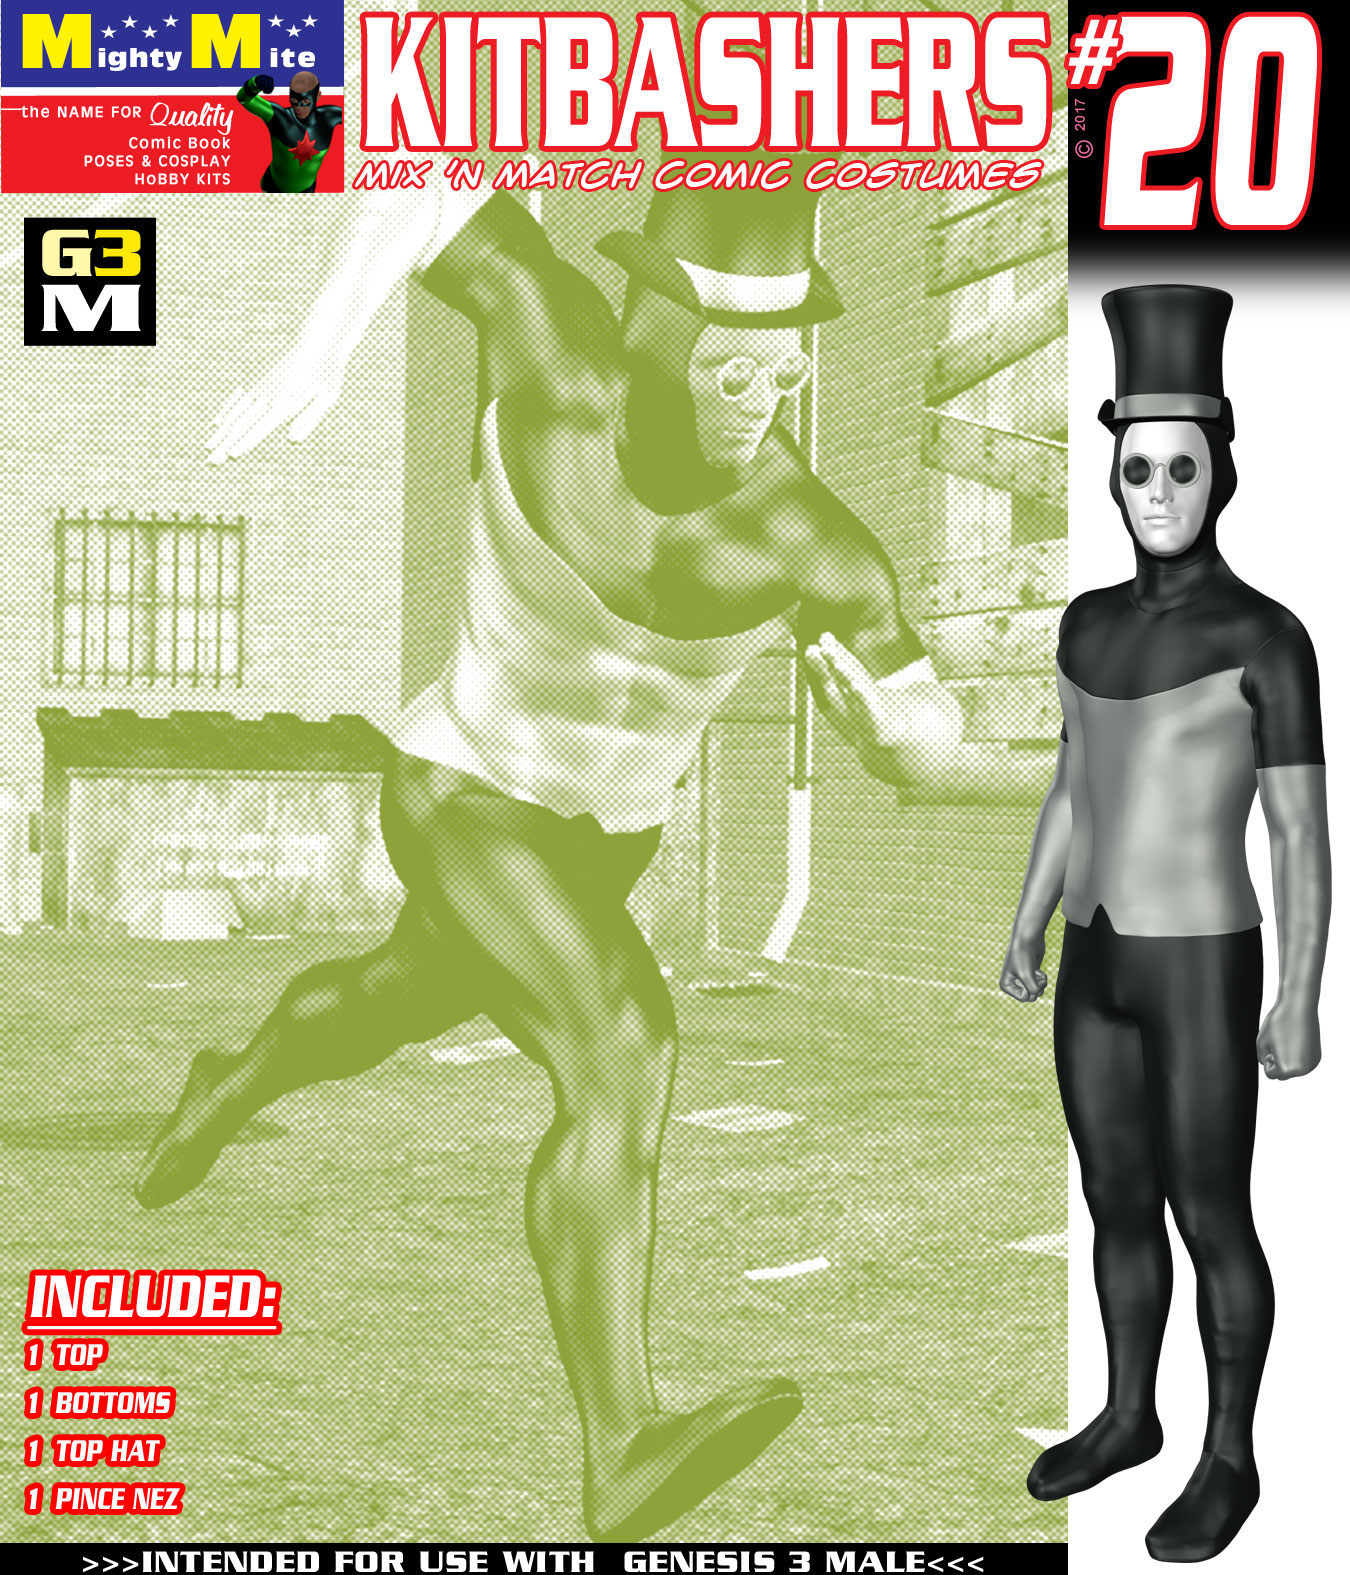 Kitbashers 020 MMG3M by: MightyMite, 3D Models by Daz 3D